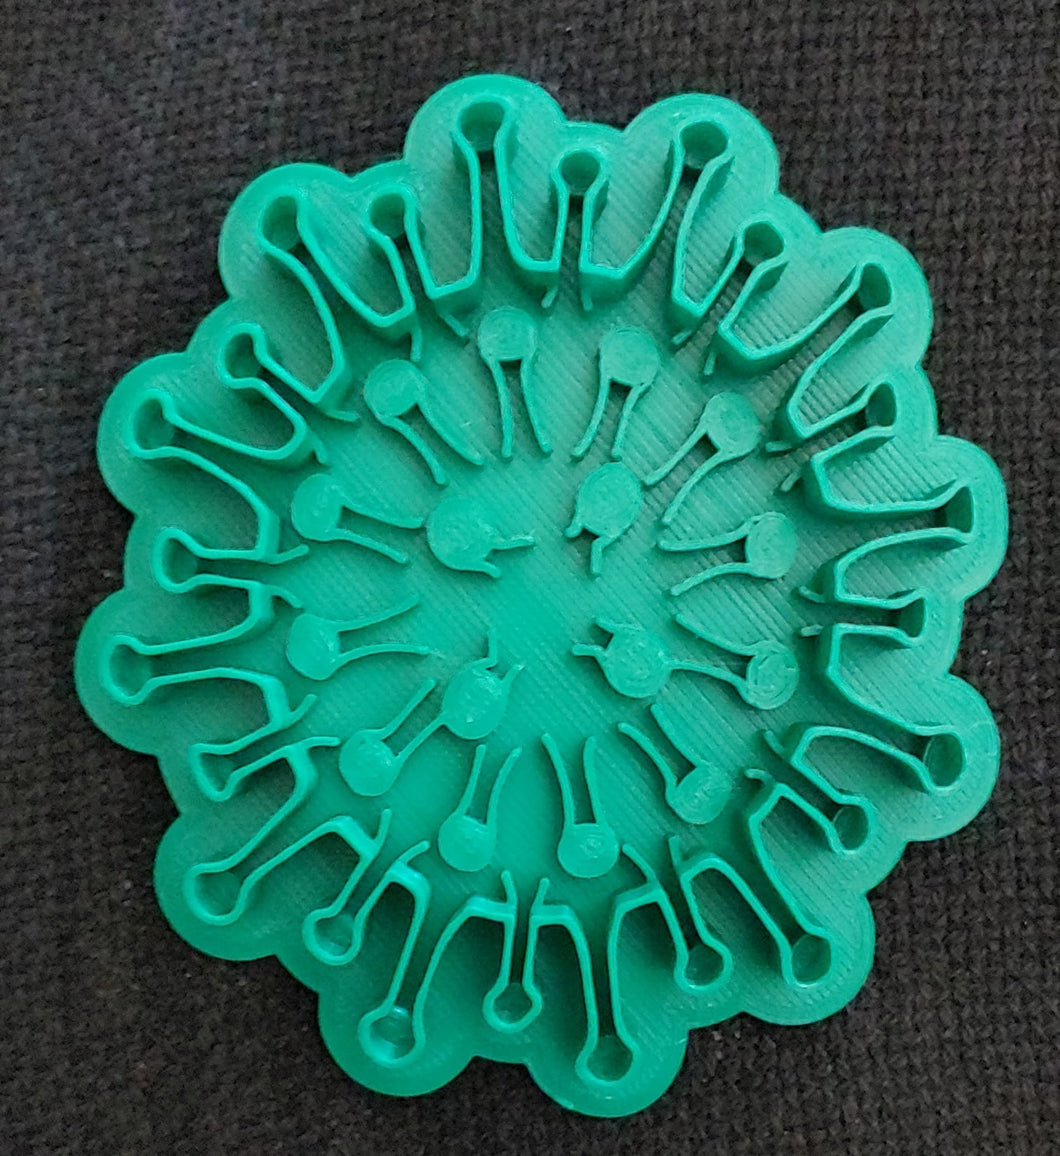 3D Printed Covid-19 Virus Cookie Cutter